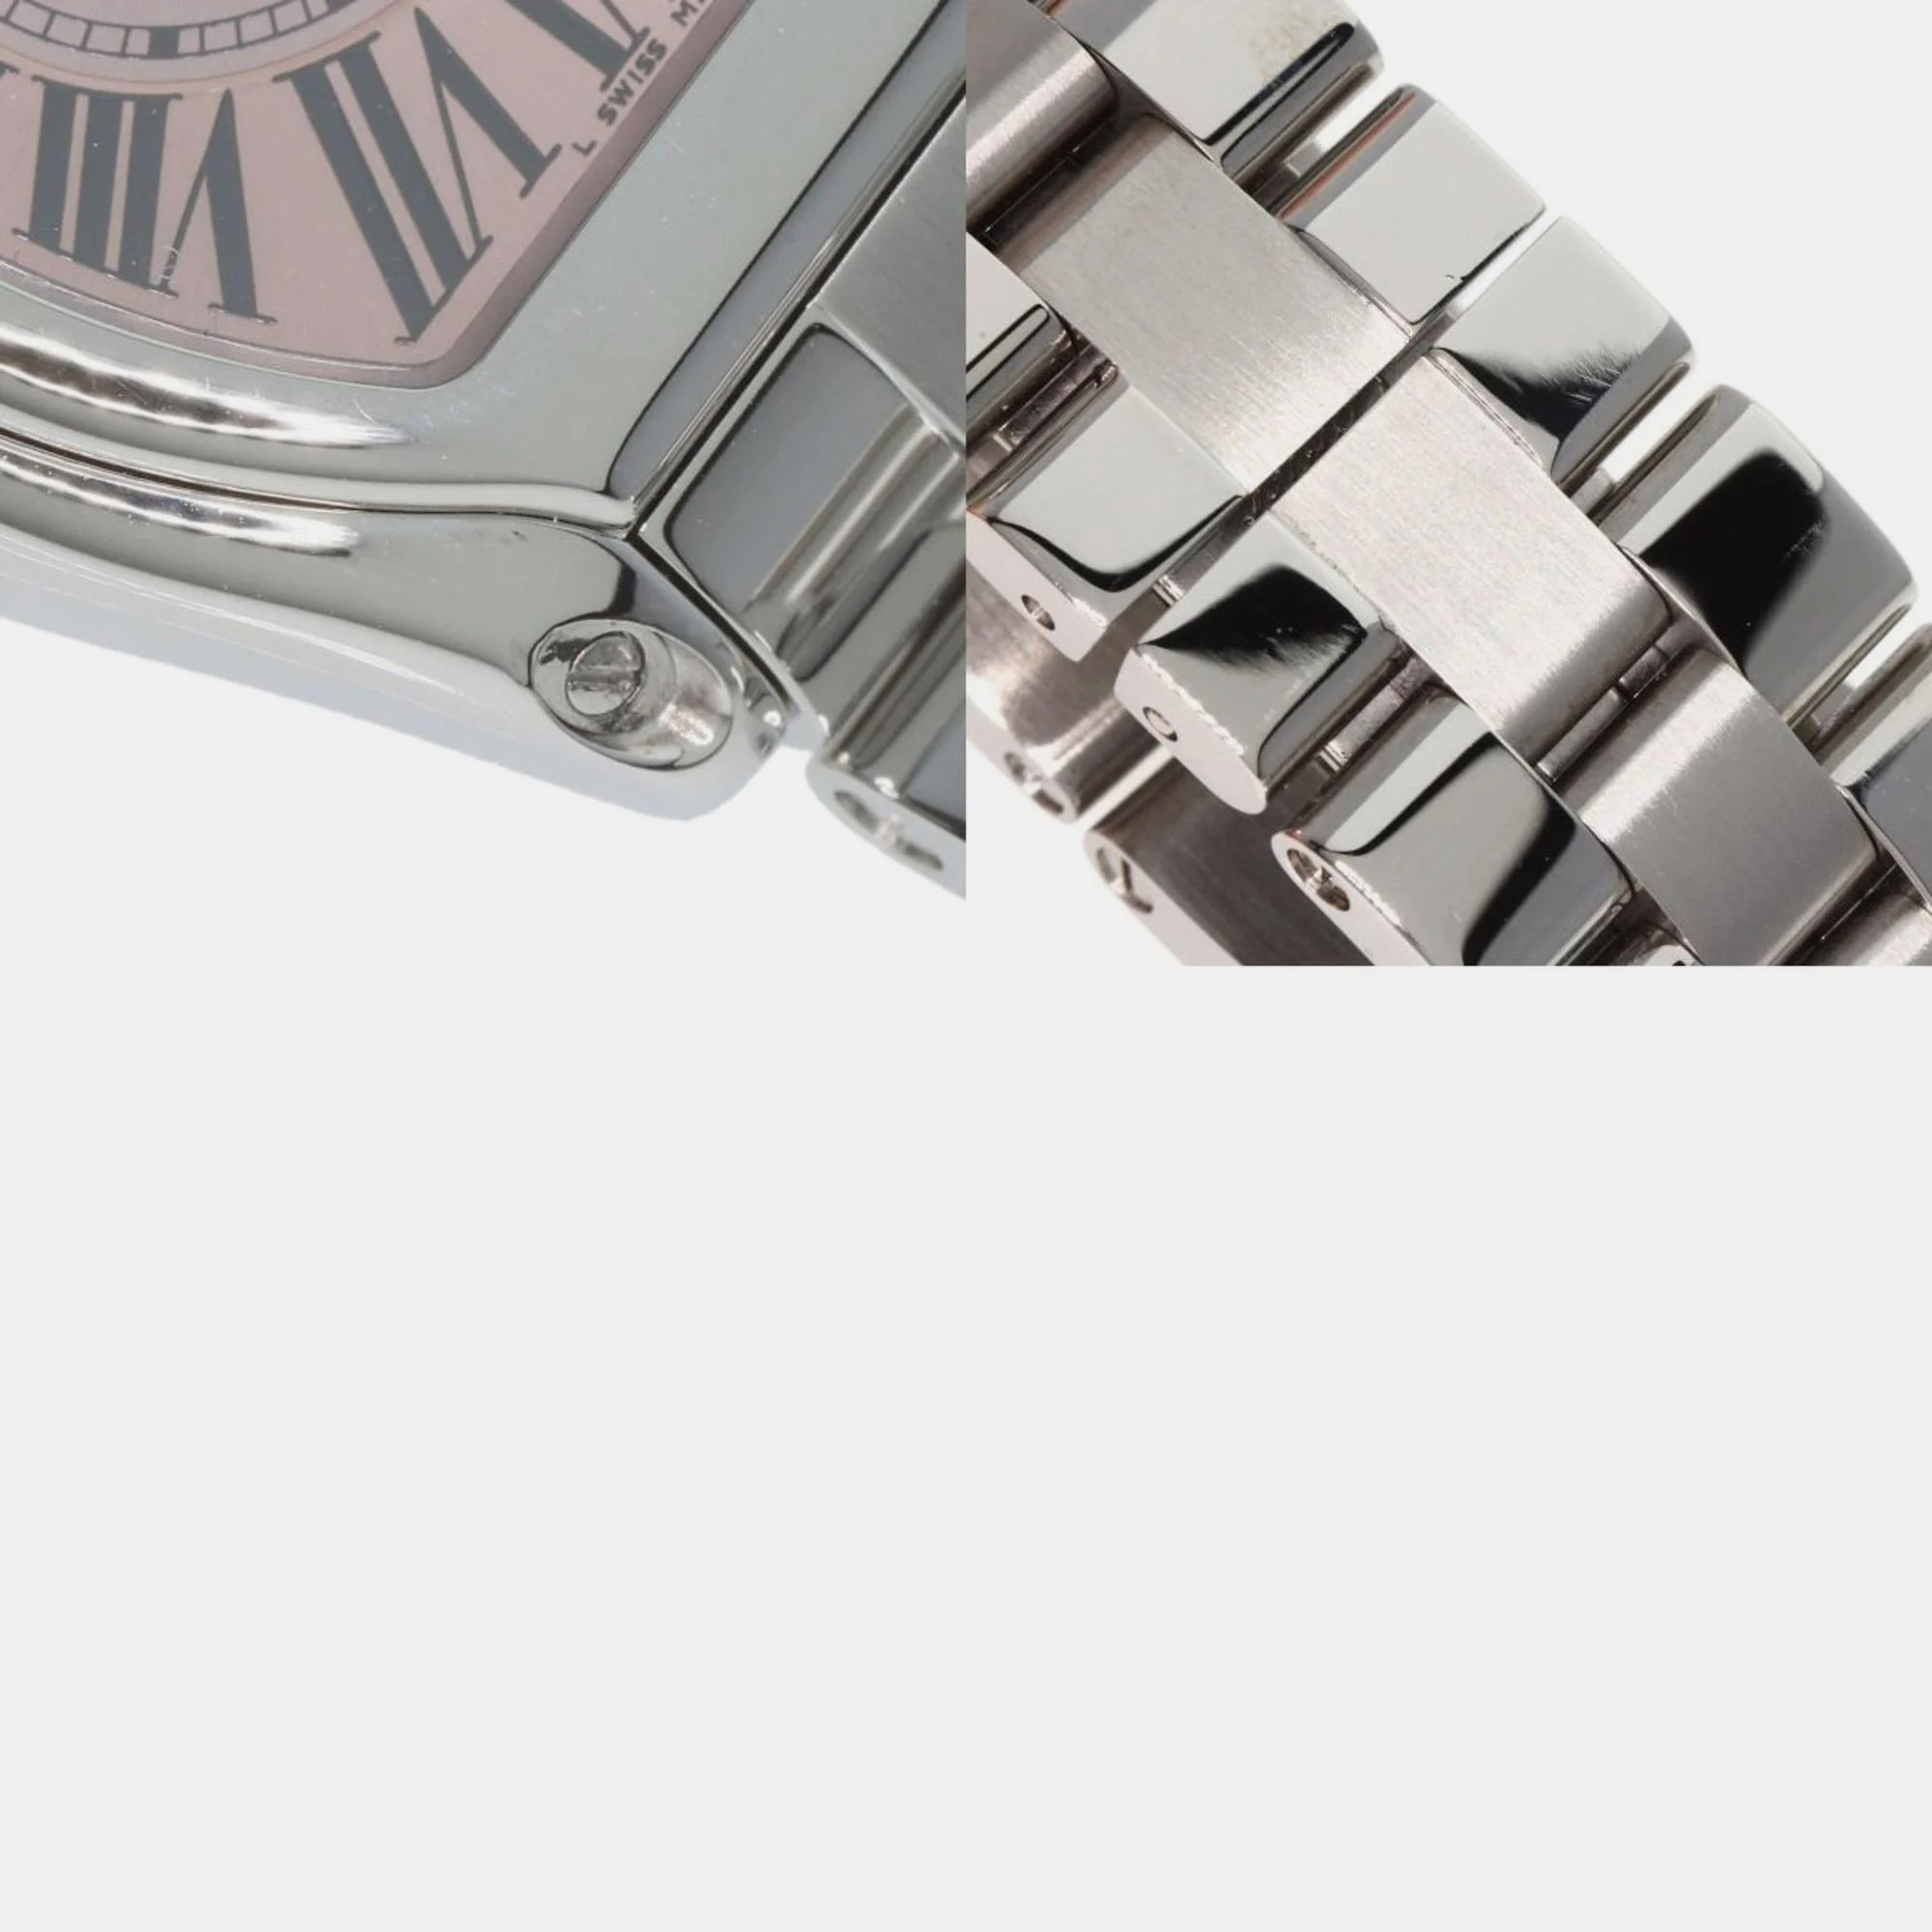 Cartier Pink Stainless Steel Roadster W62043V3 Quartz Women's Wristwatch 31 Mm